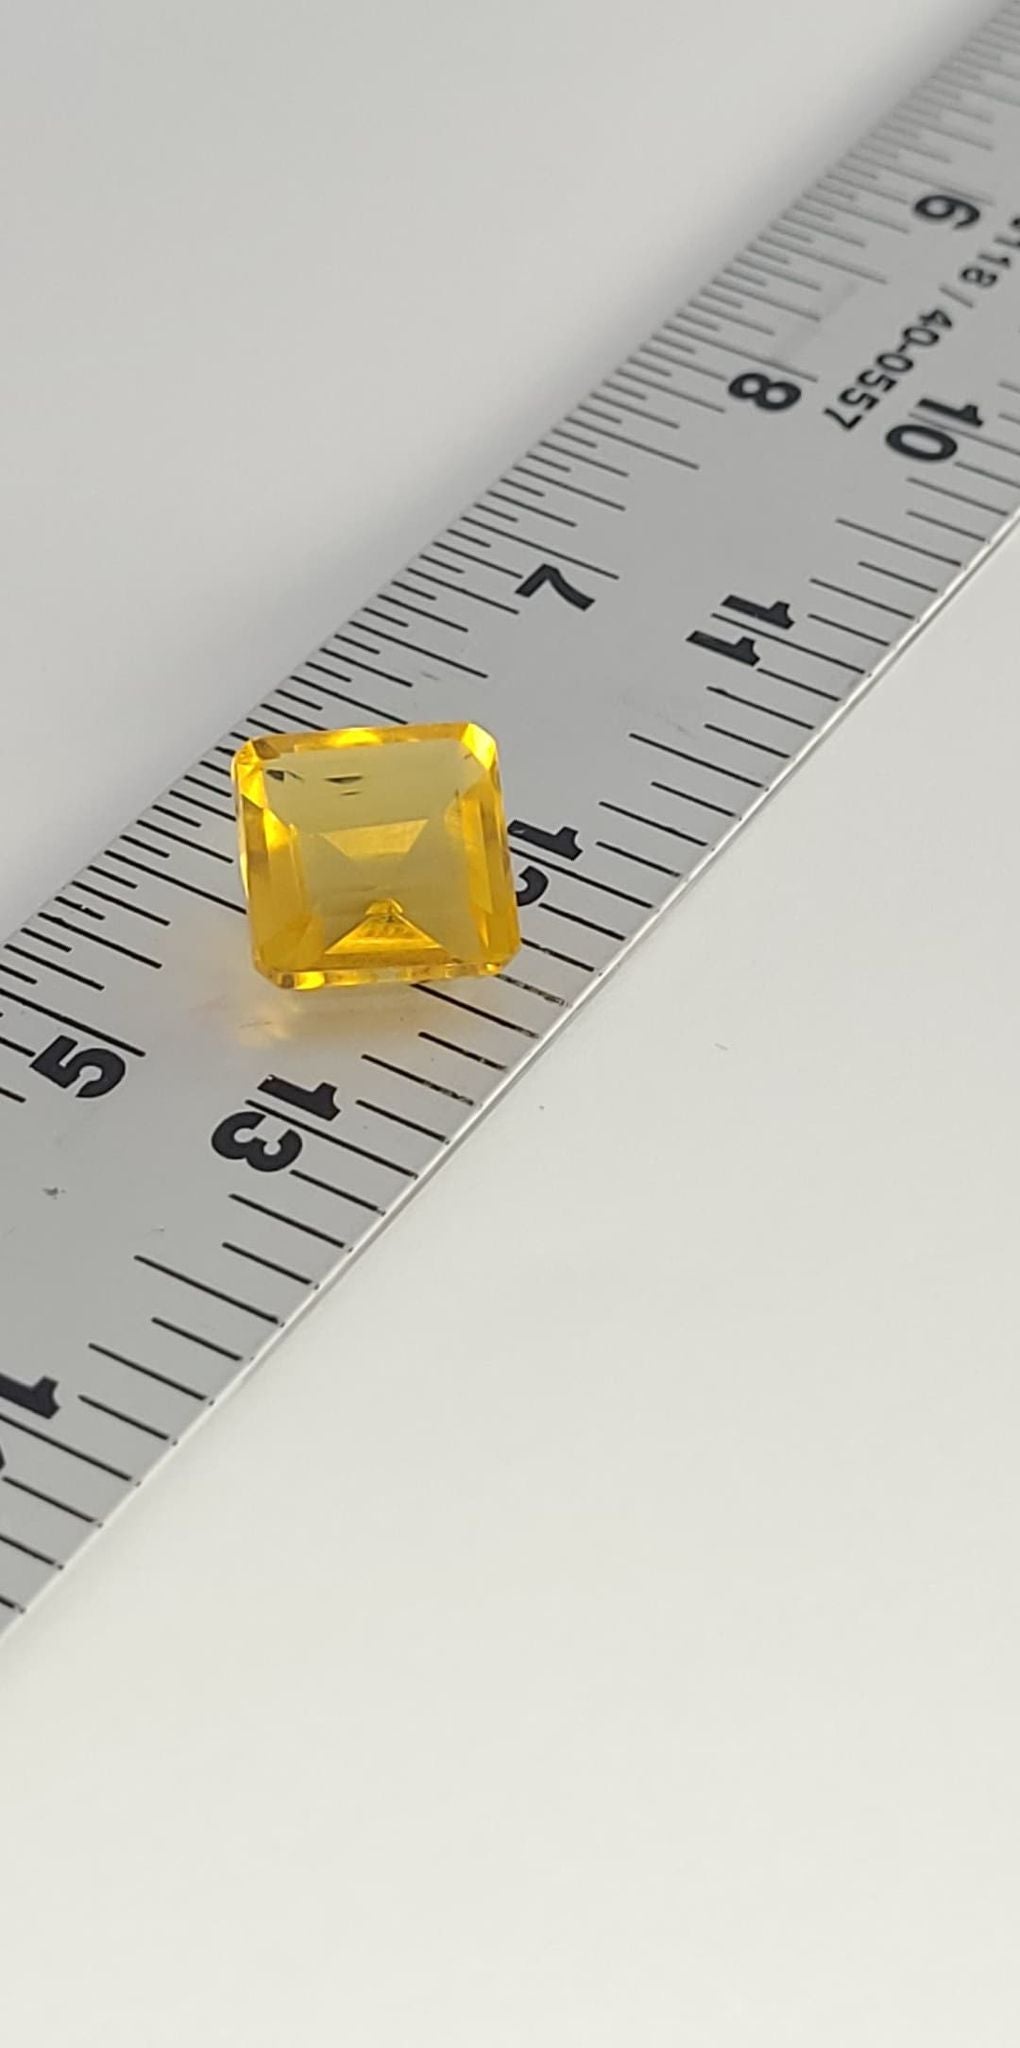 Faceted Gemstones, Yellow Topaz, Jewelry grade